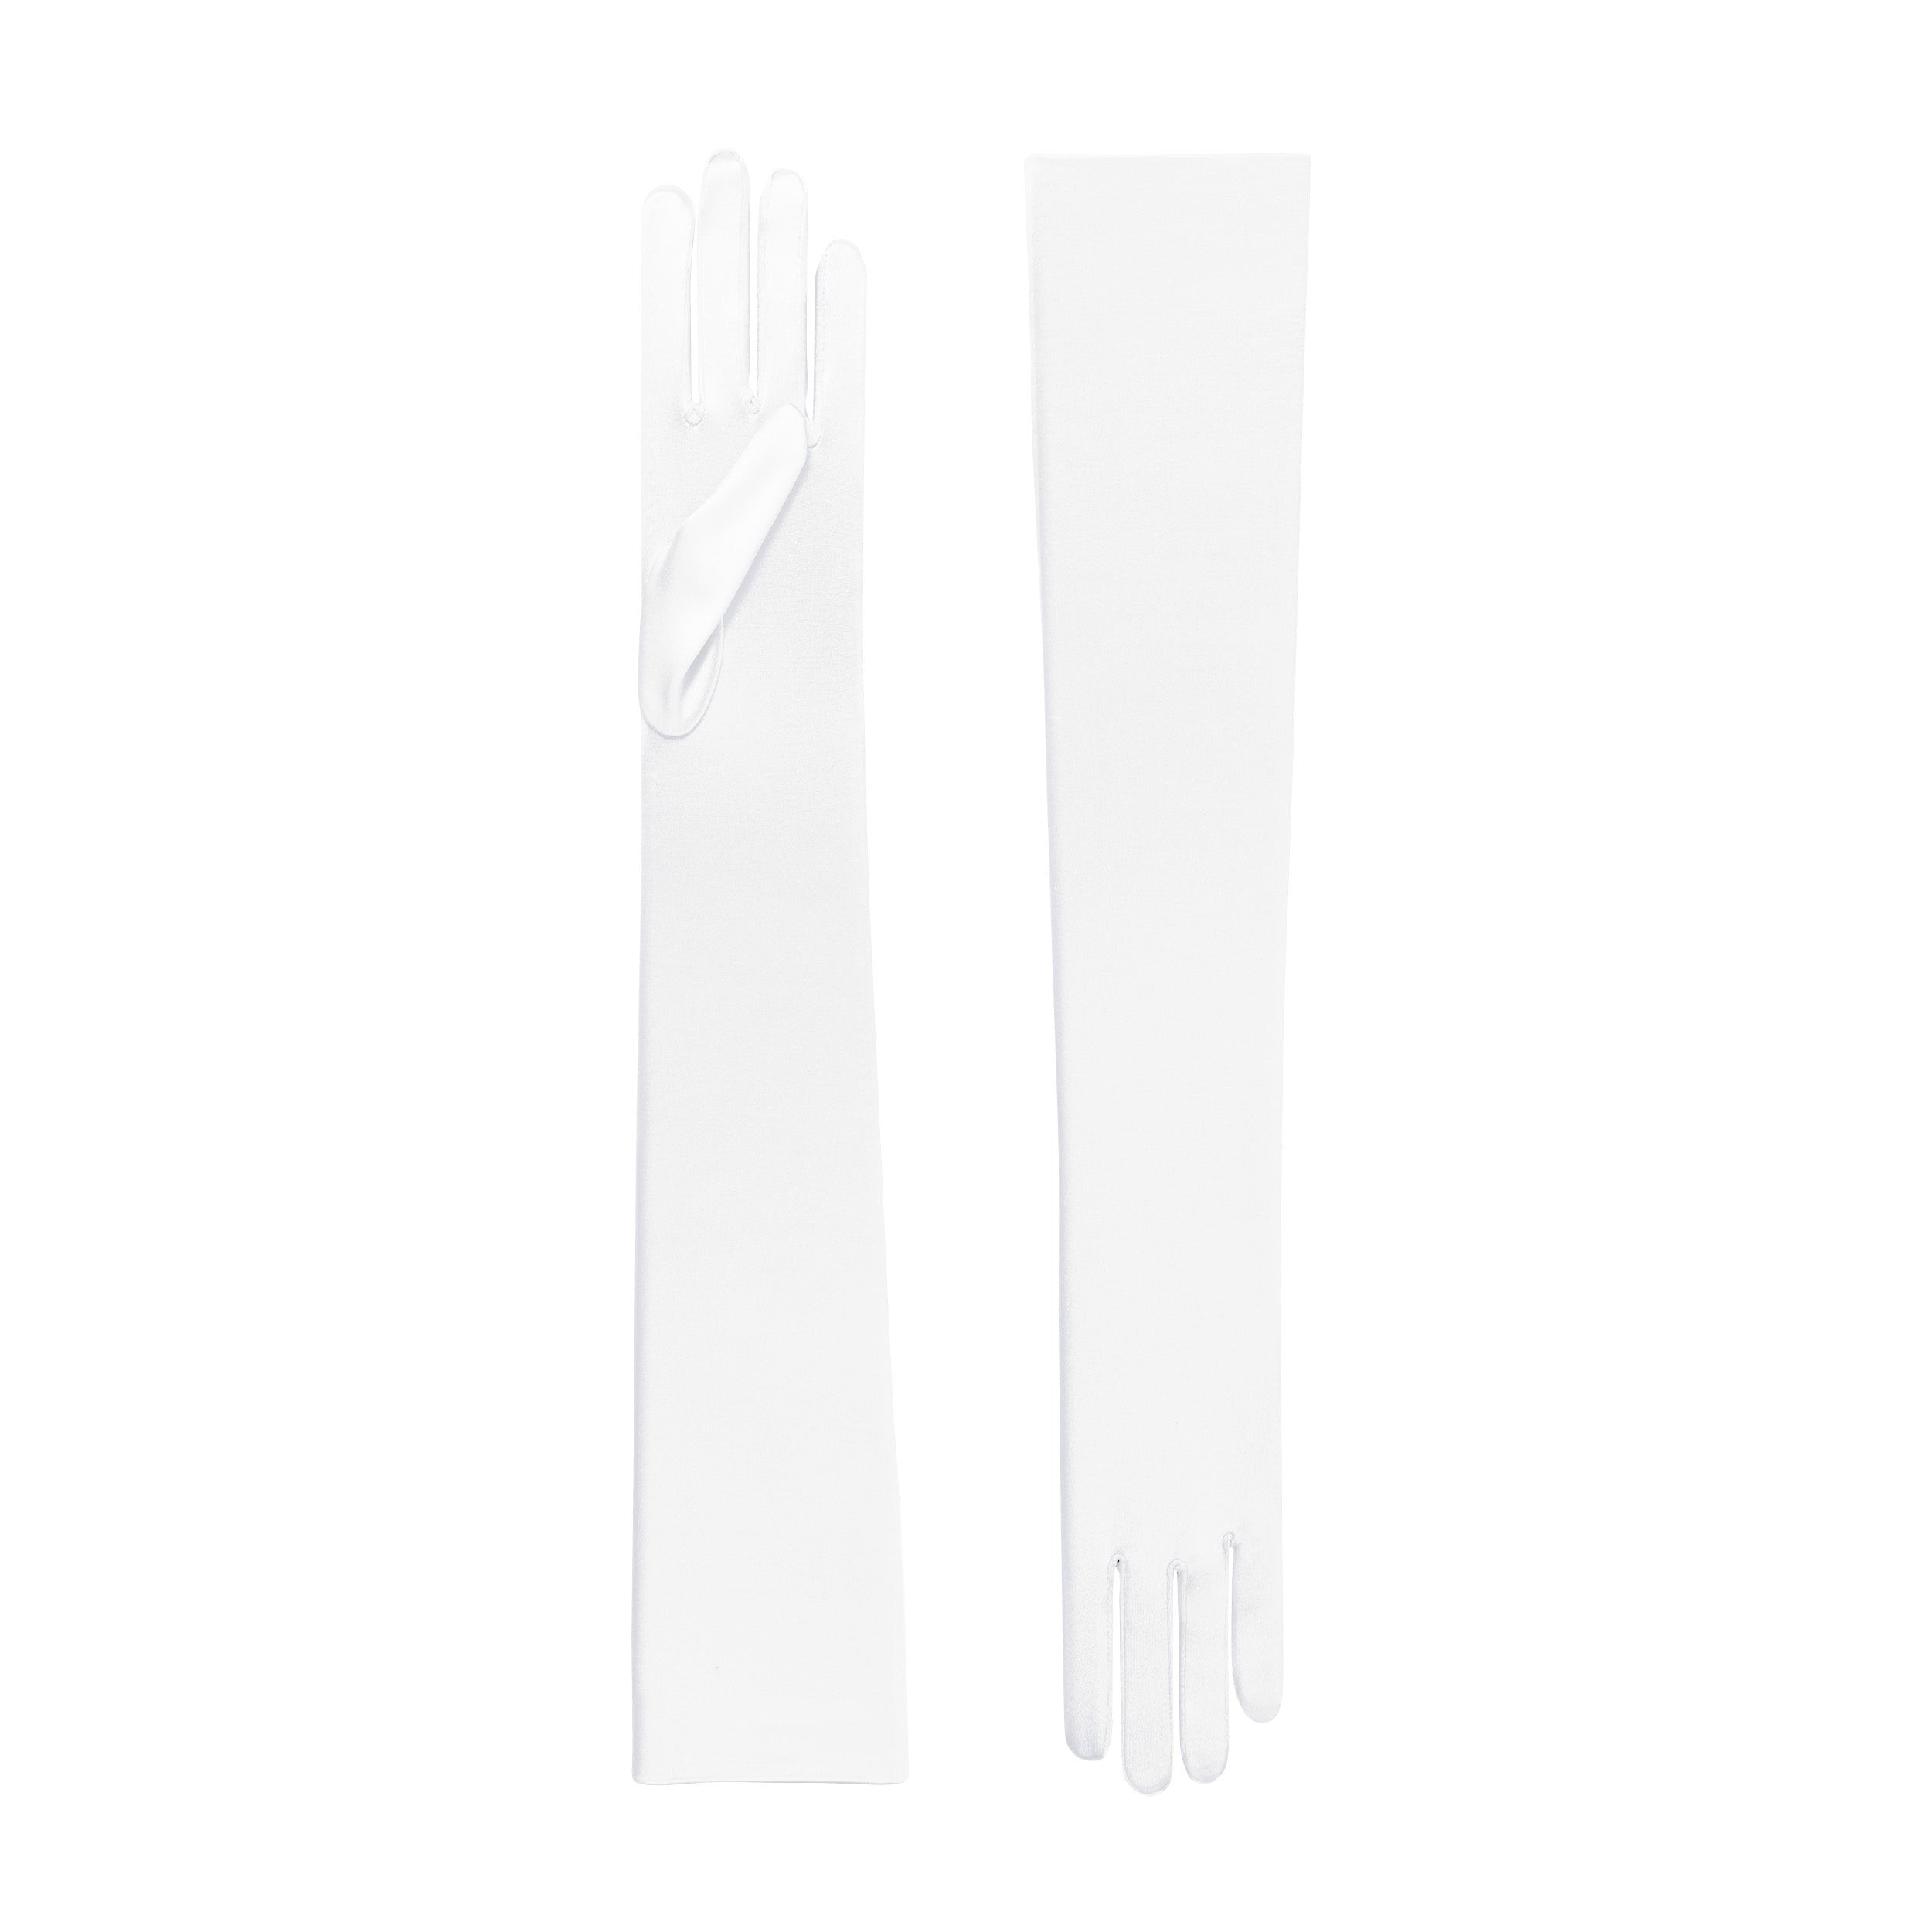 Cornelia James - White Satin Opera Gloves - Hermione - Size Large (8½) - Made to Measure Evening Gloves by Cornelia James product